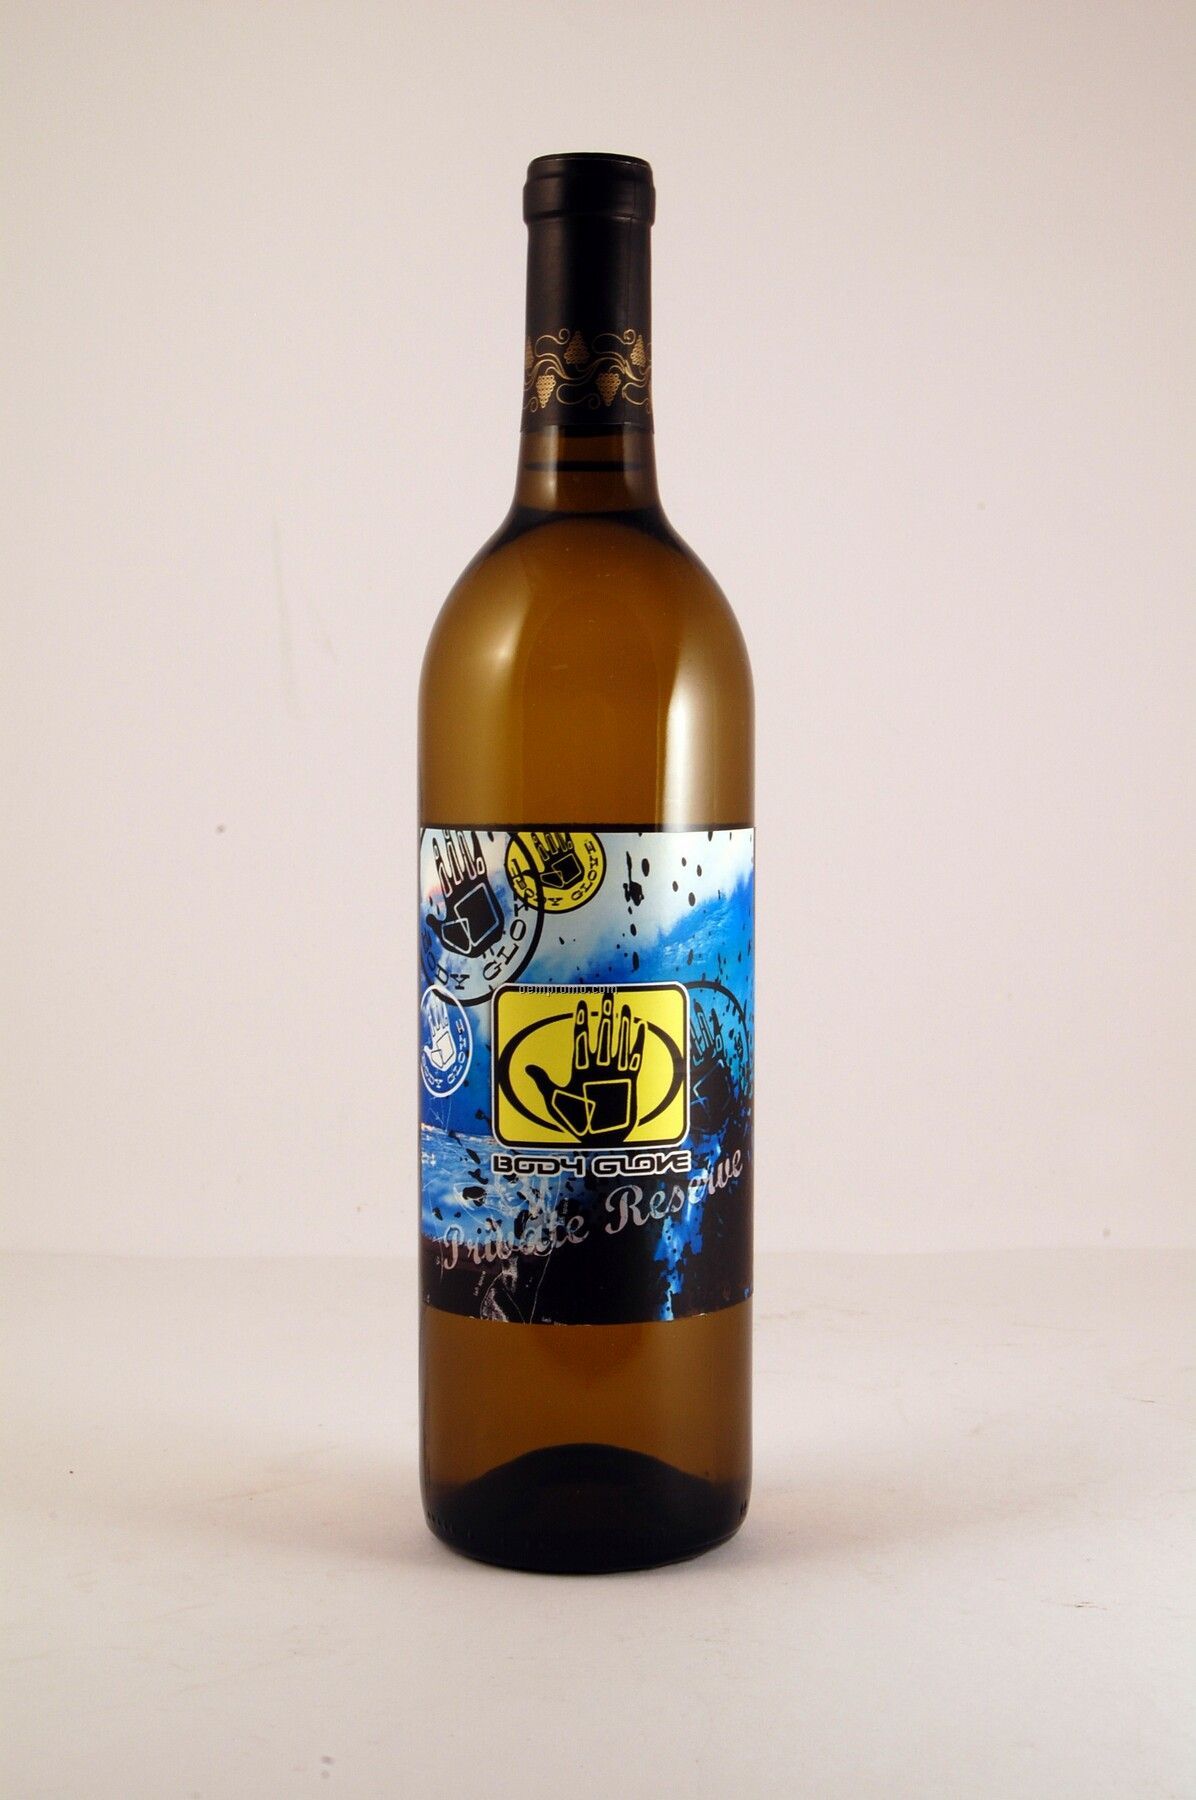 2009 Wv Gewurztraminer California Wine (Custom Labeled Wine)